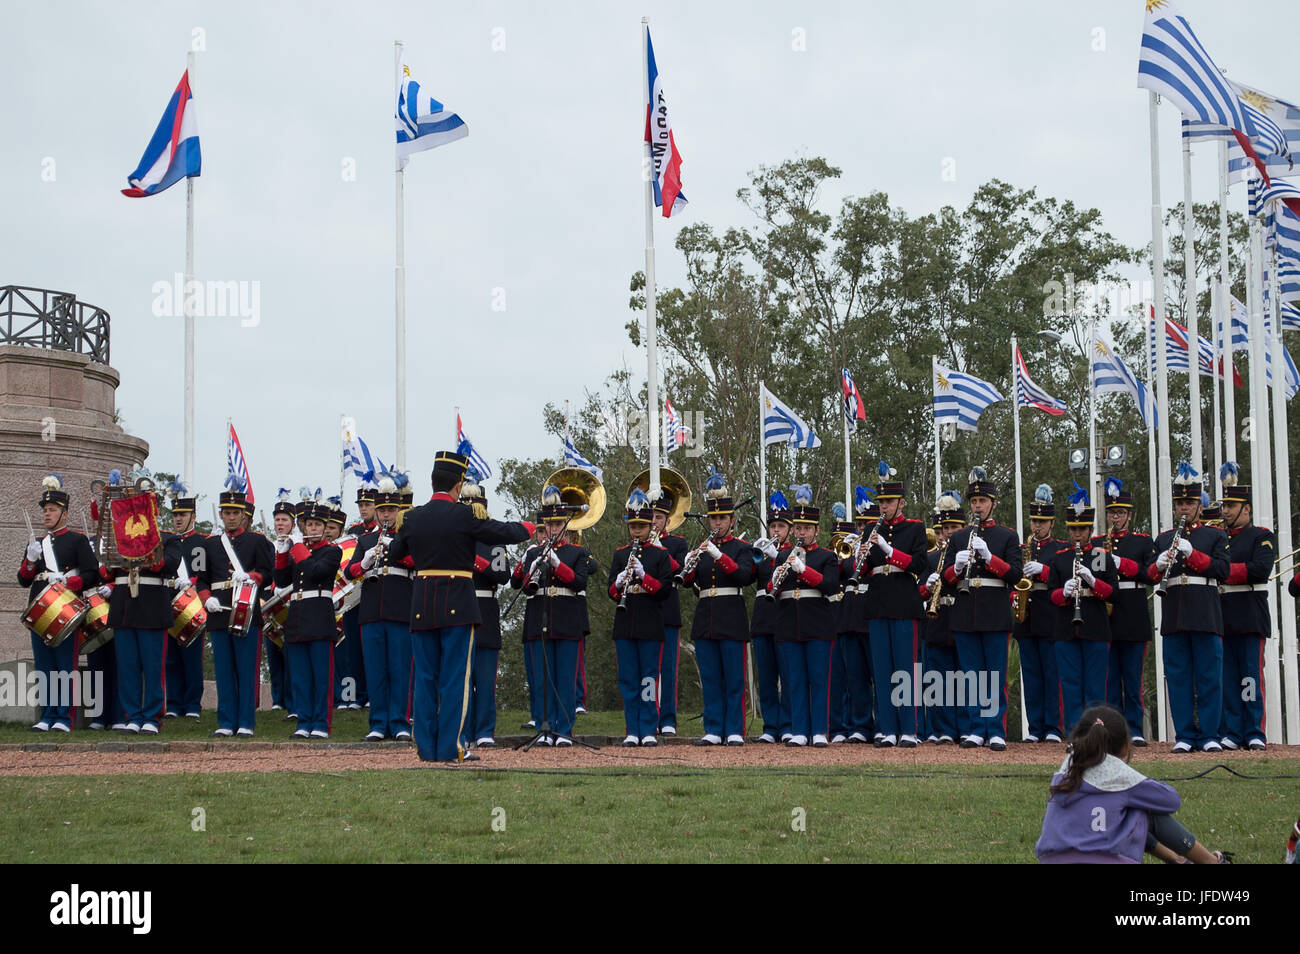 CANELONES, URUGUAY - MAY 18, 2017: Band of the army of Uruguay commemorating the 206 anniversary of the Batalla de Las Piedras Stock Photo